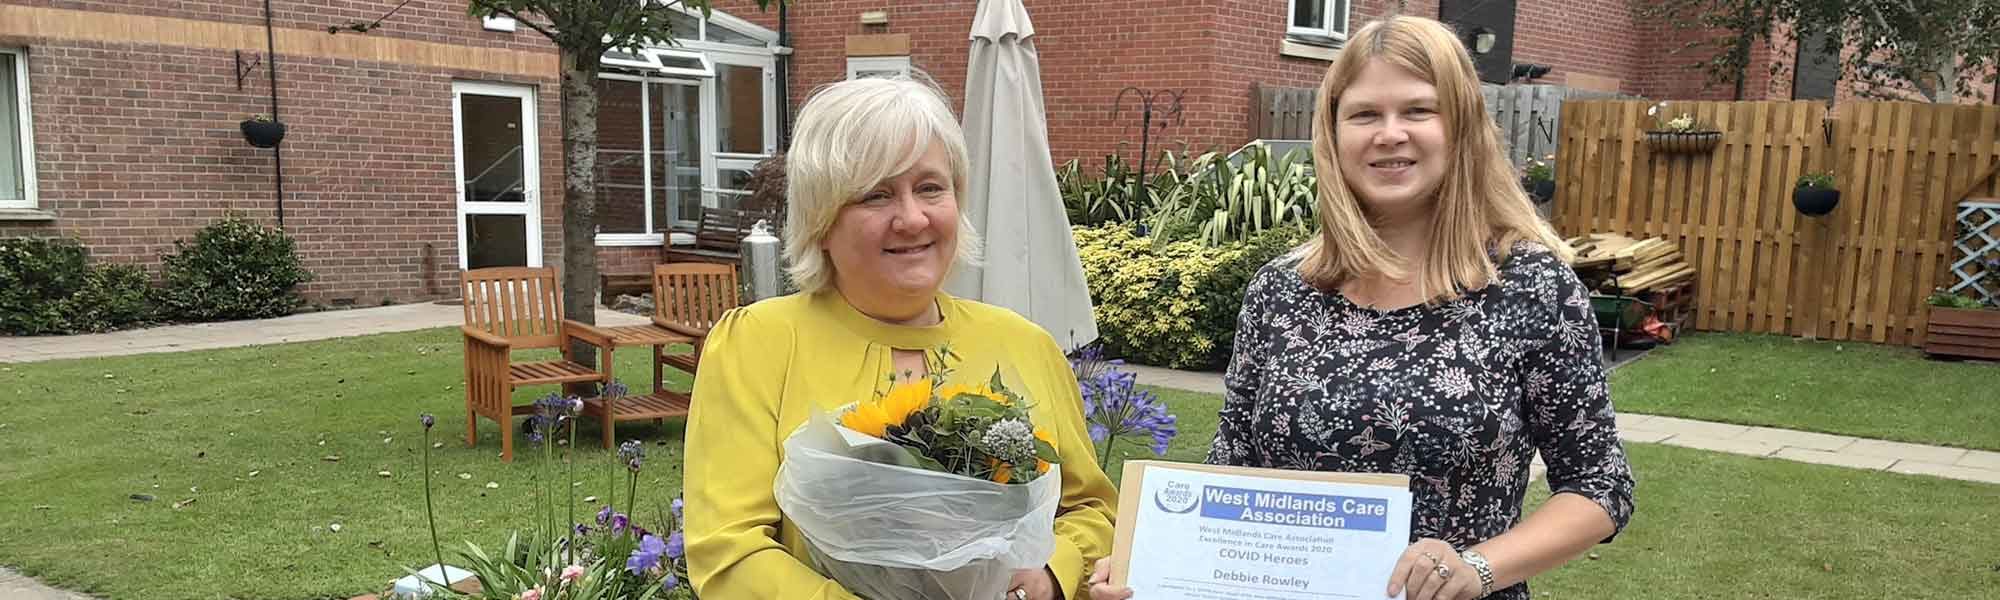 St-Giles-nursing-home-wins-Covid-19-protection-award.